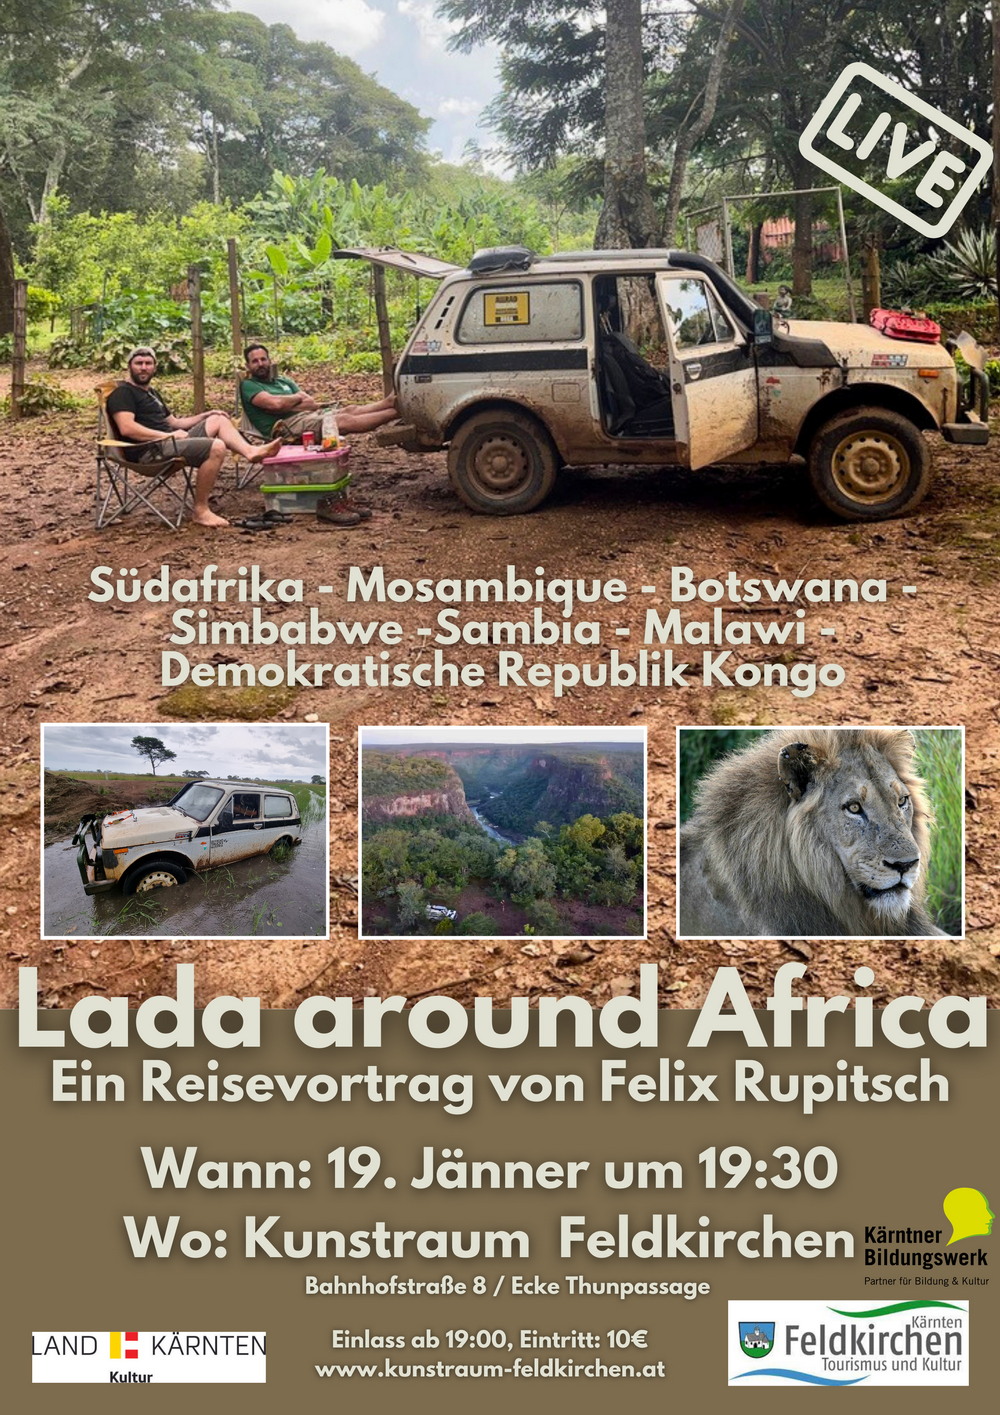 Plakat Lada around Africa KBW 1kpx